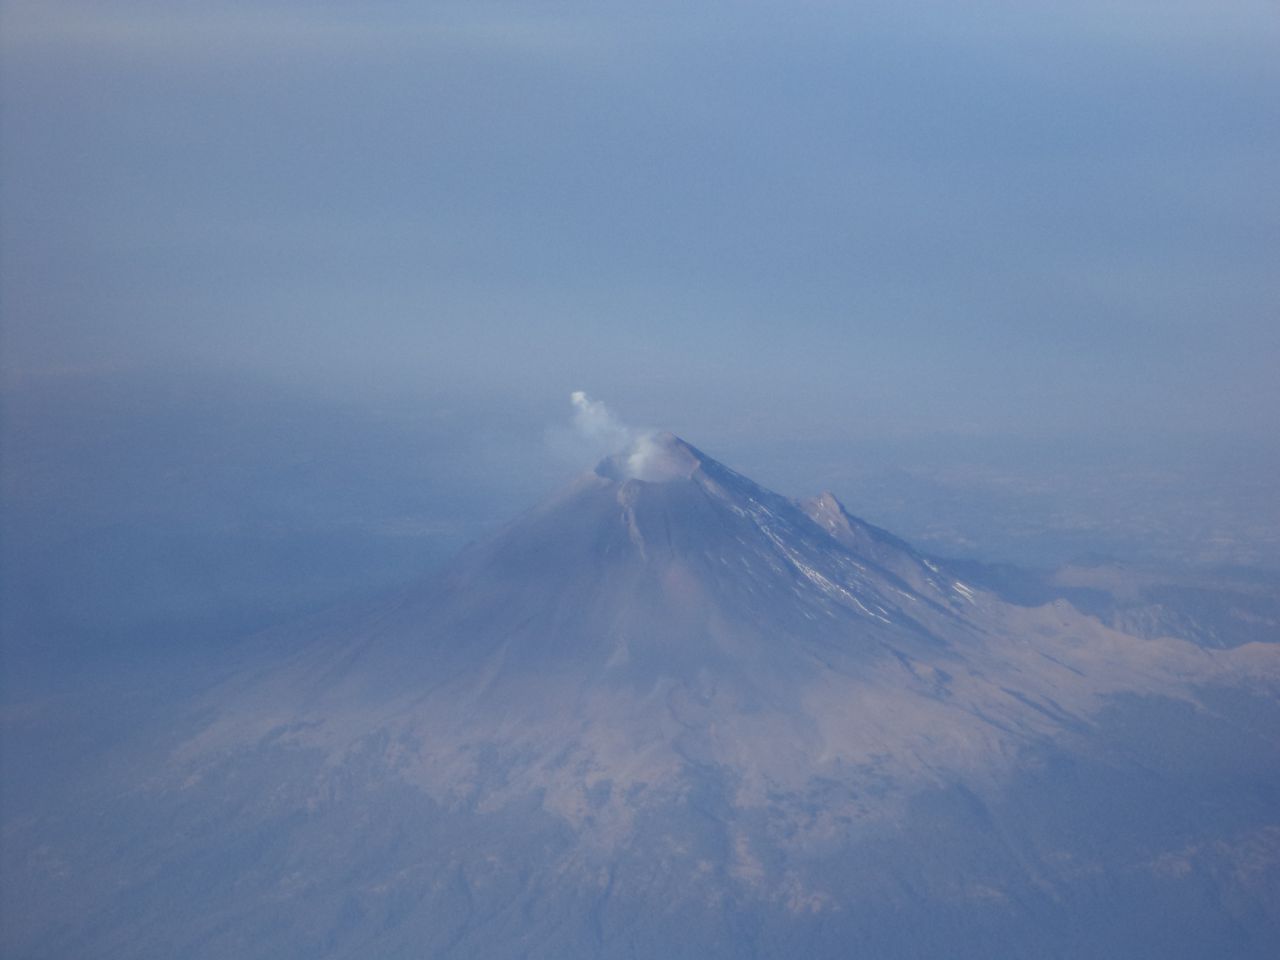 Дышащий вулкан - Центральная Америка. 2016